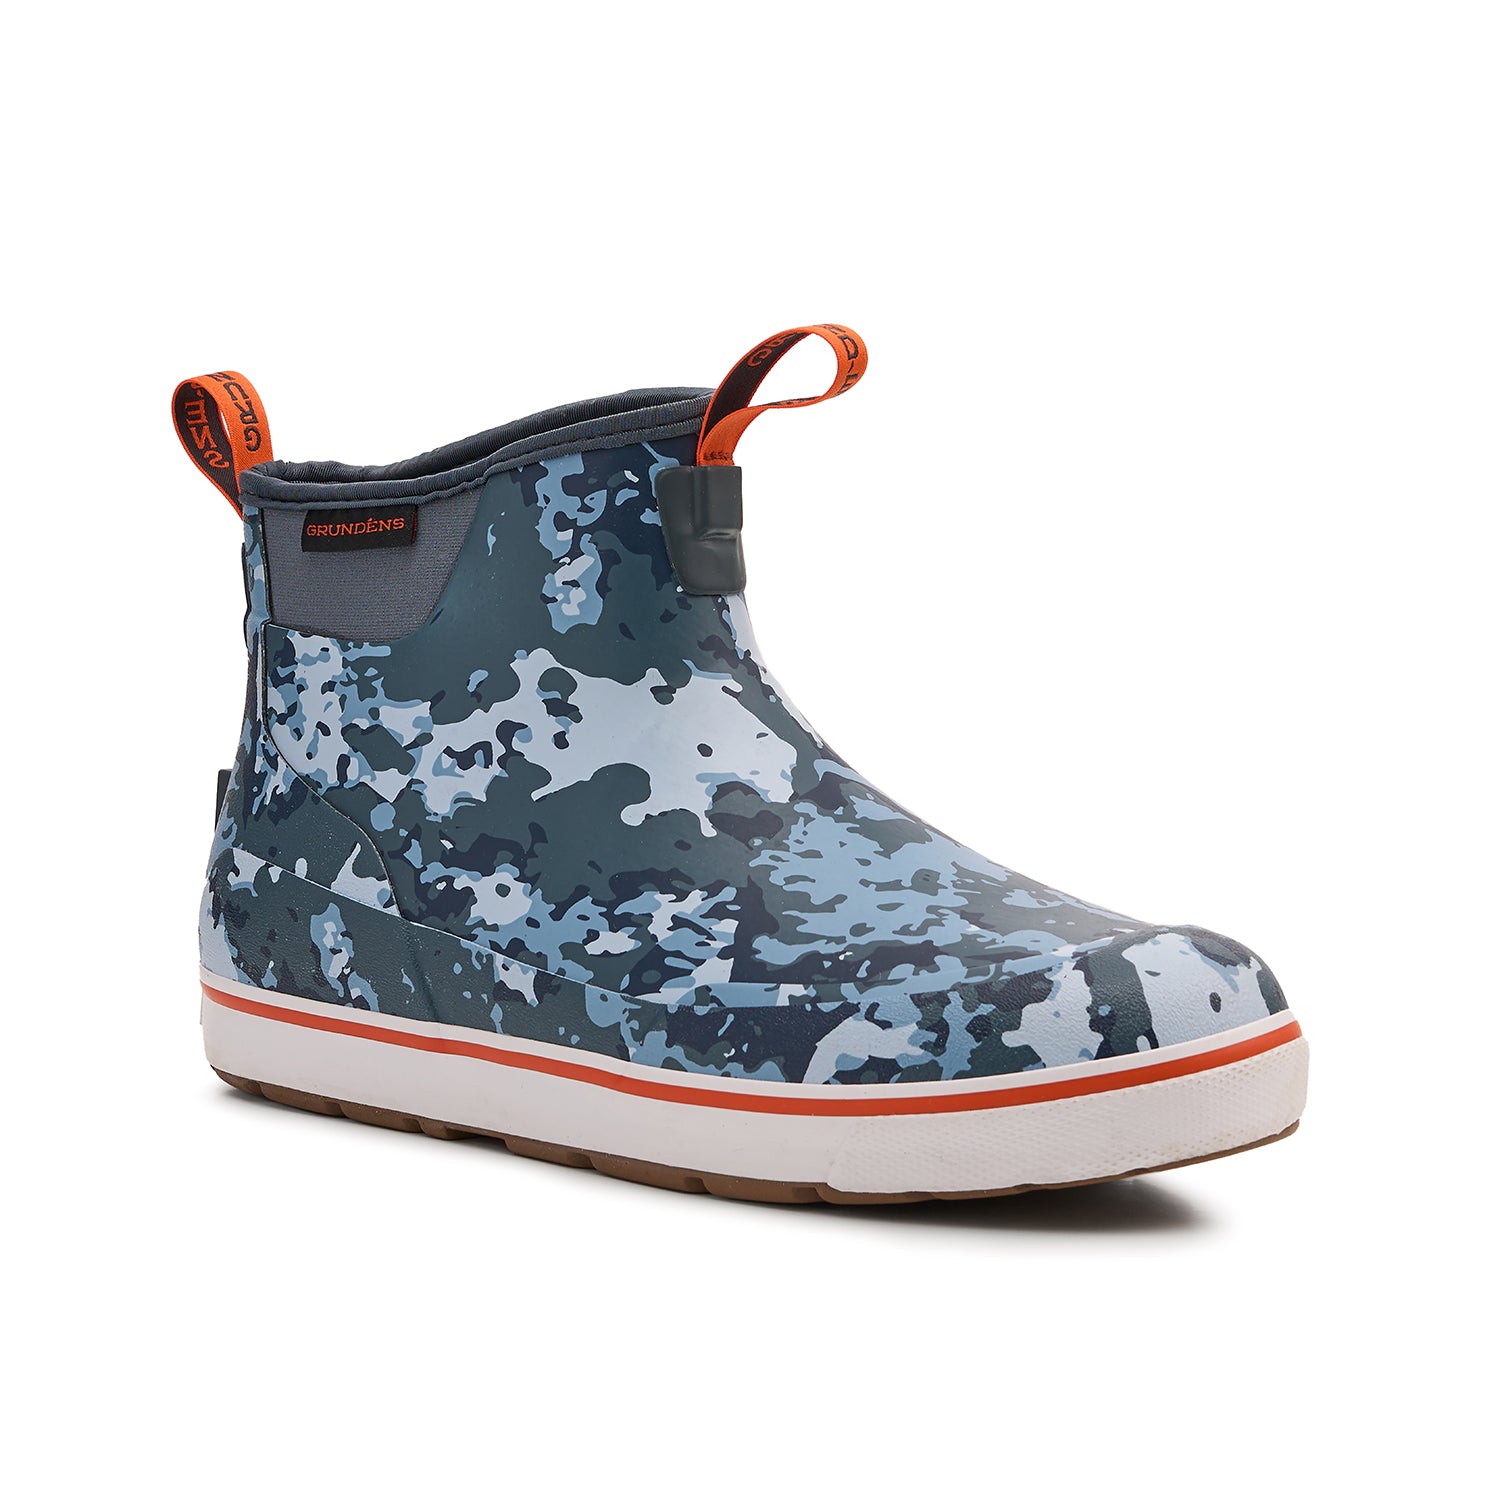 WTW unisex Rain Boots for Men and Women, Waterproof Rubber Fishing Deck Boots Neoprene Boots Slip On Ankle Garden Shoes